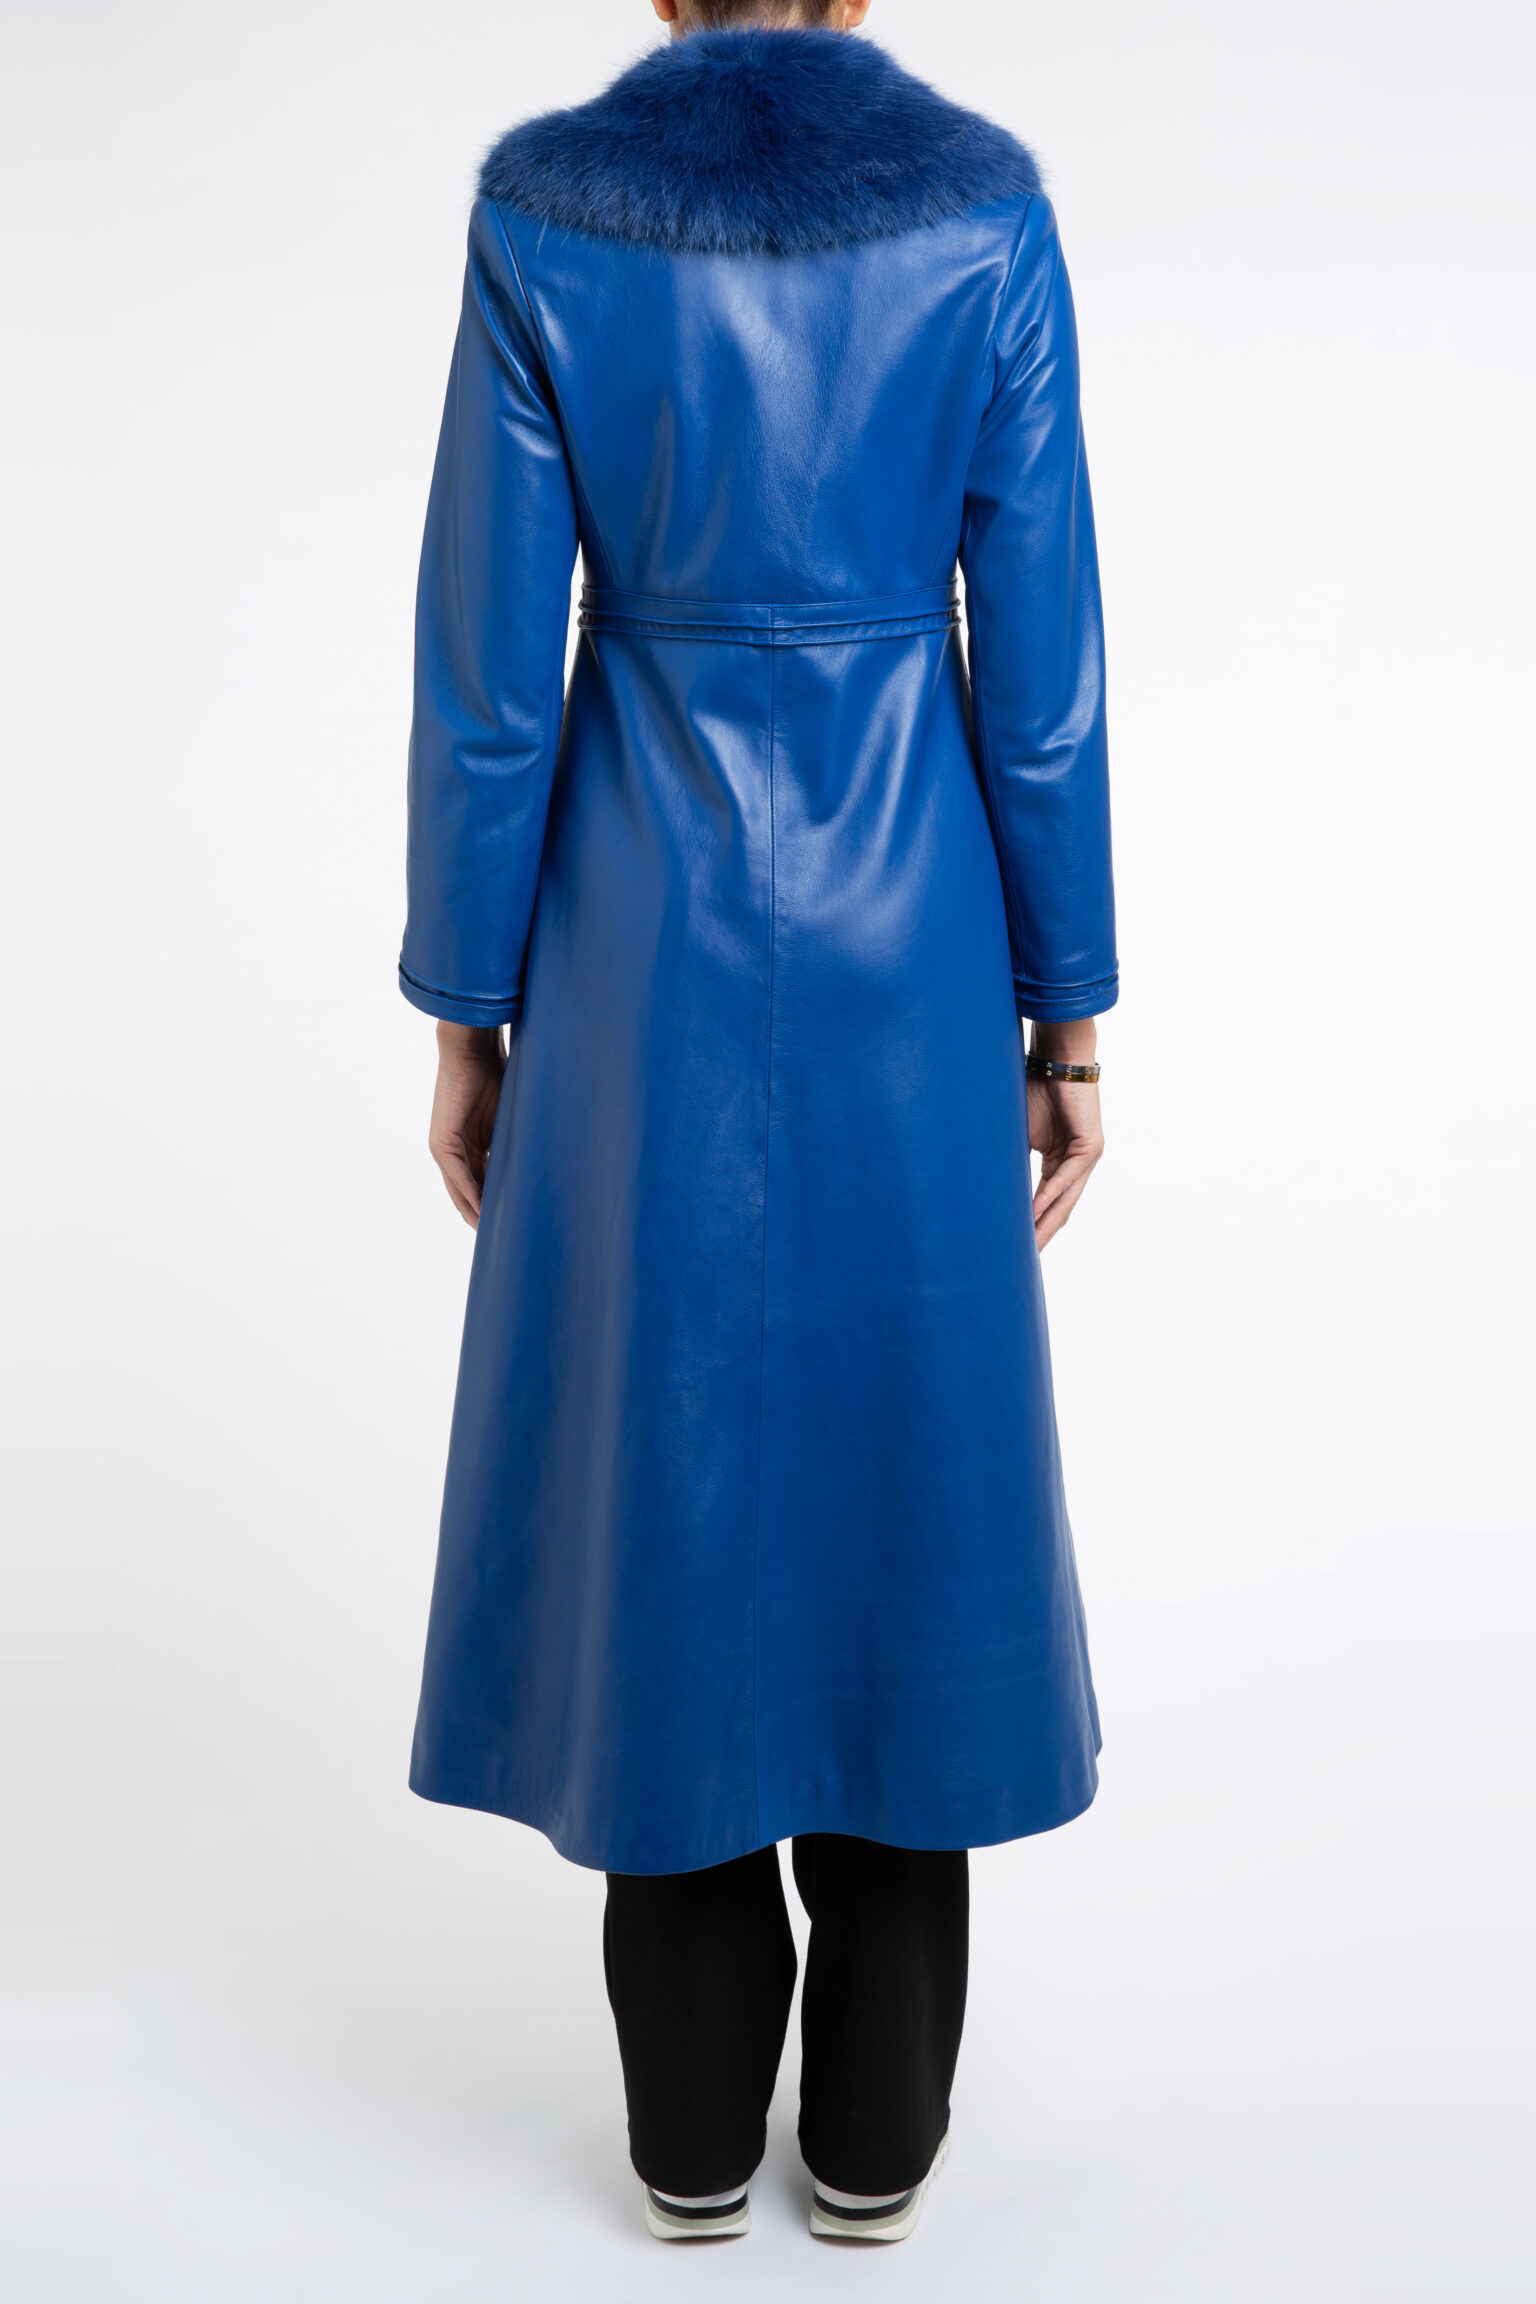 Bespoke Edward Leather Trench Coat in Blue